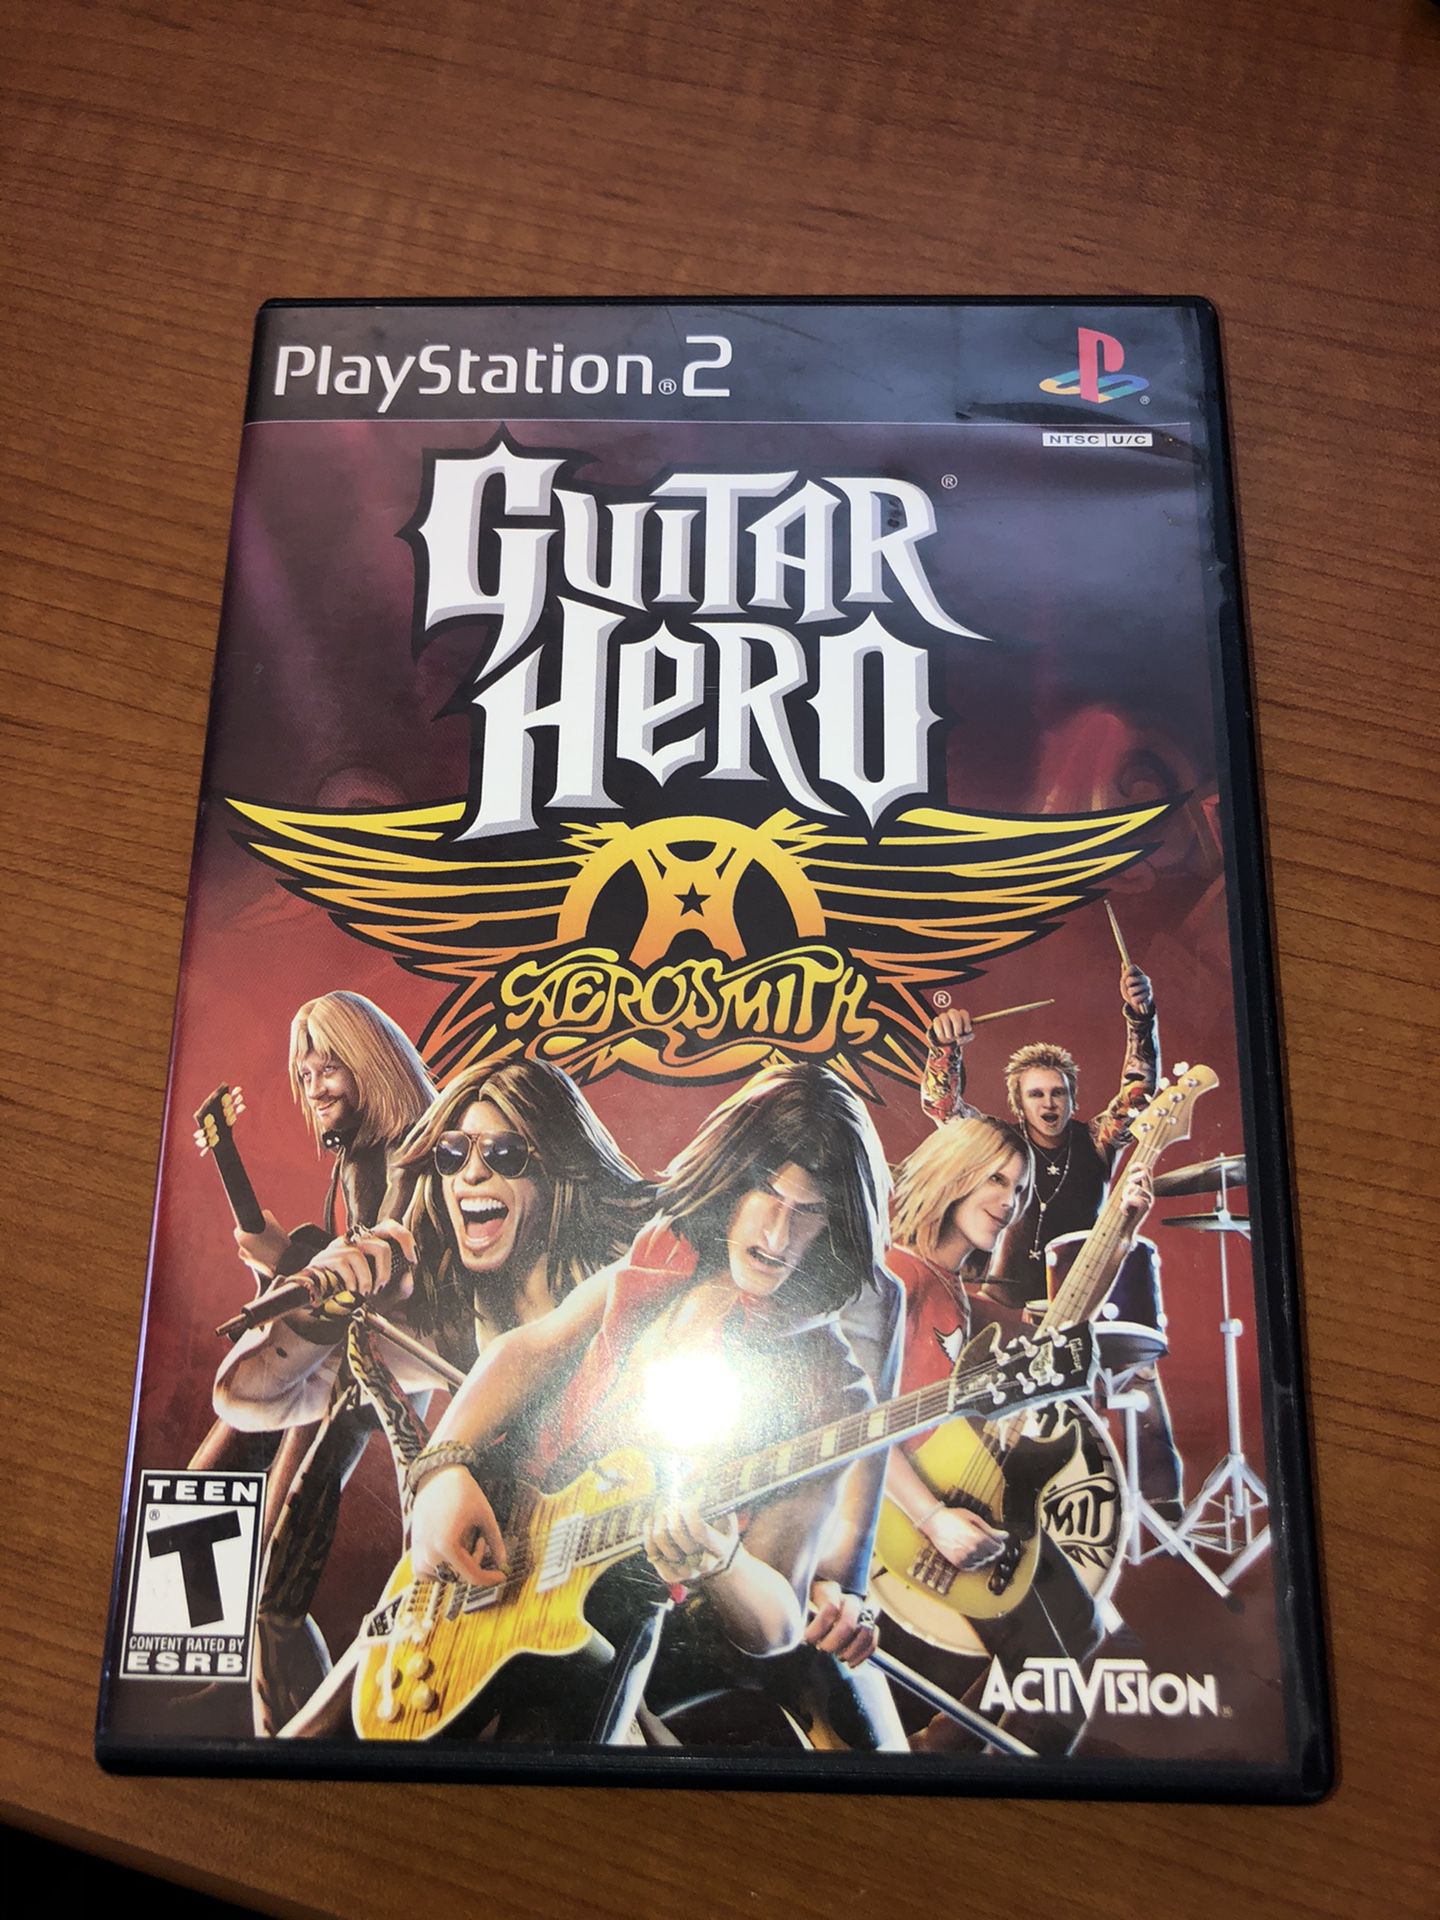 Guitar Herp AeroSmith PS2 Game